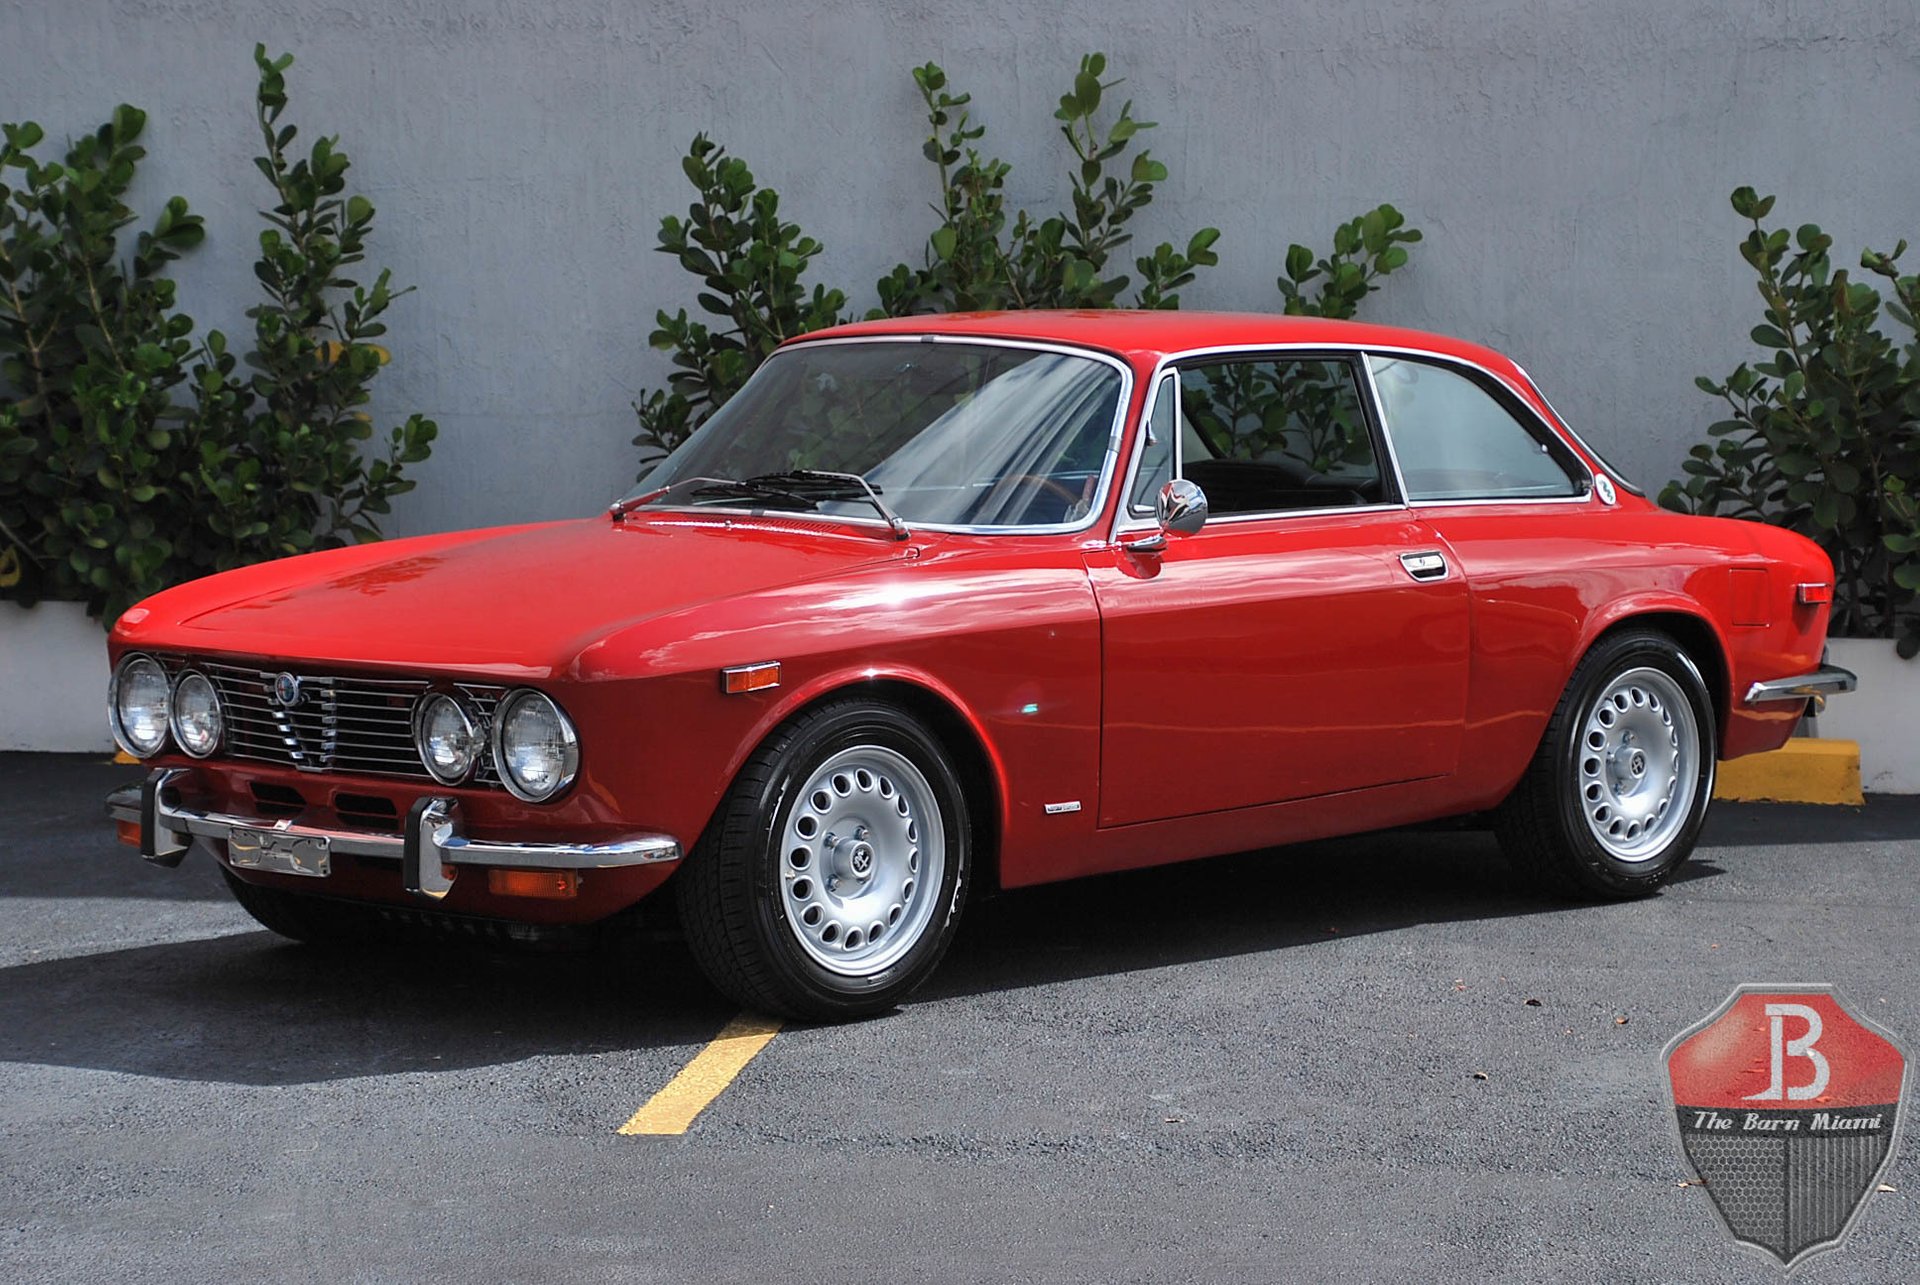 1974 Alfa Romeo 2000 | The Barn Miami®